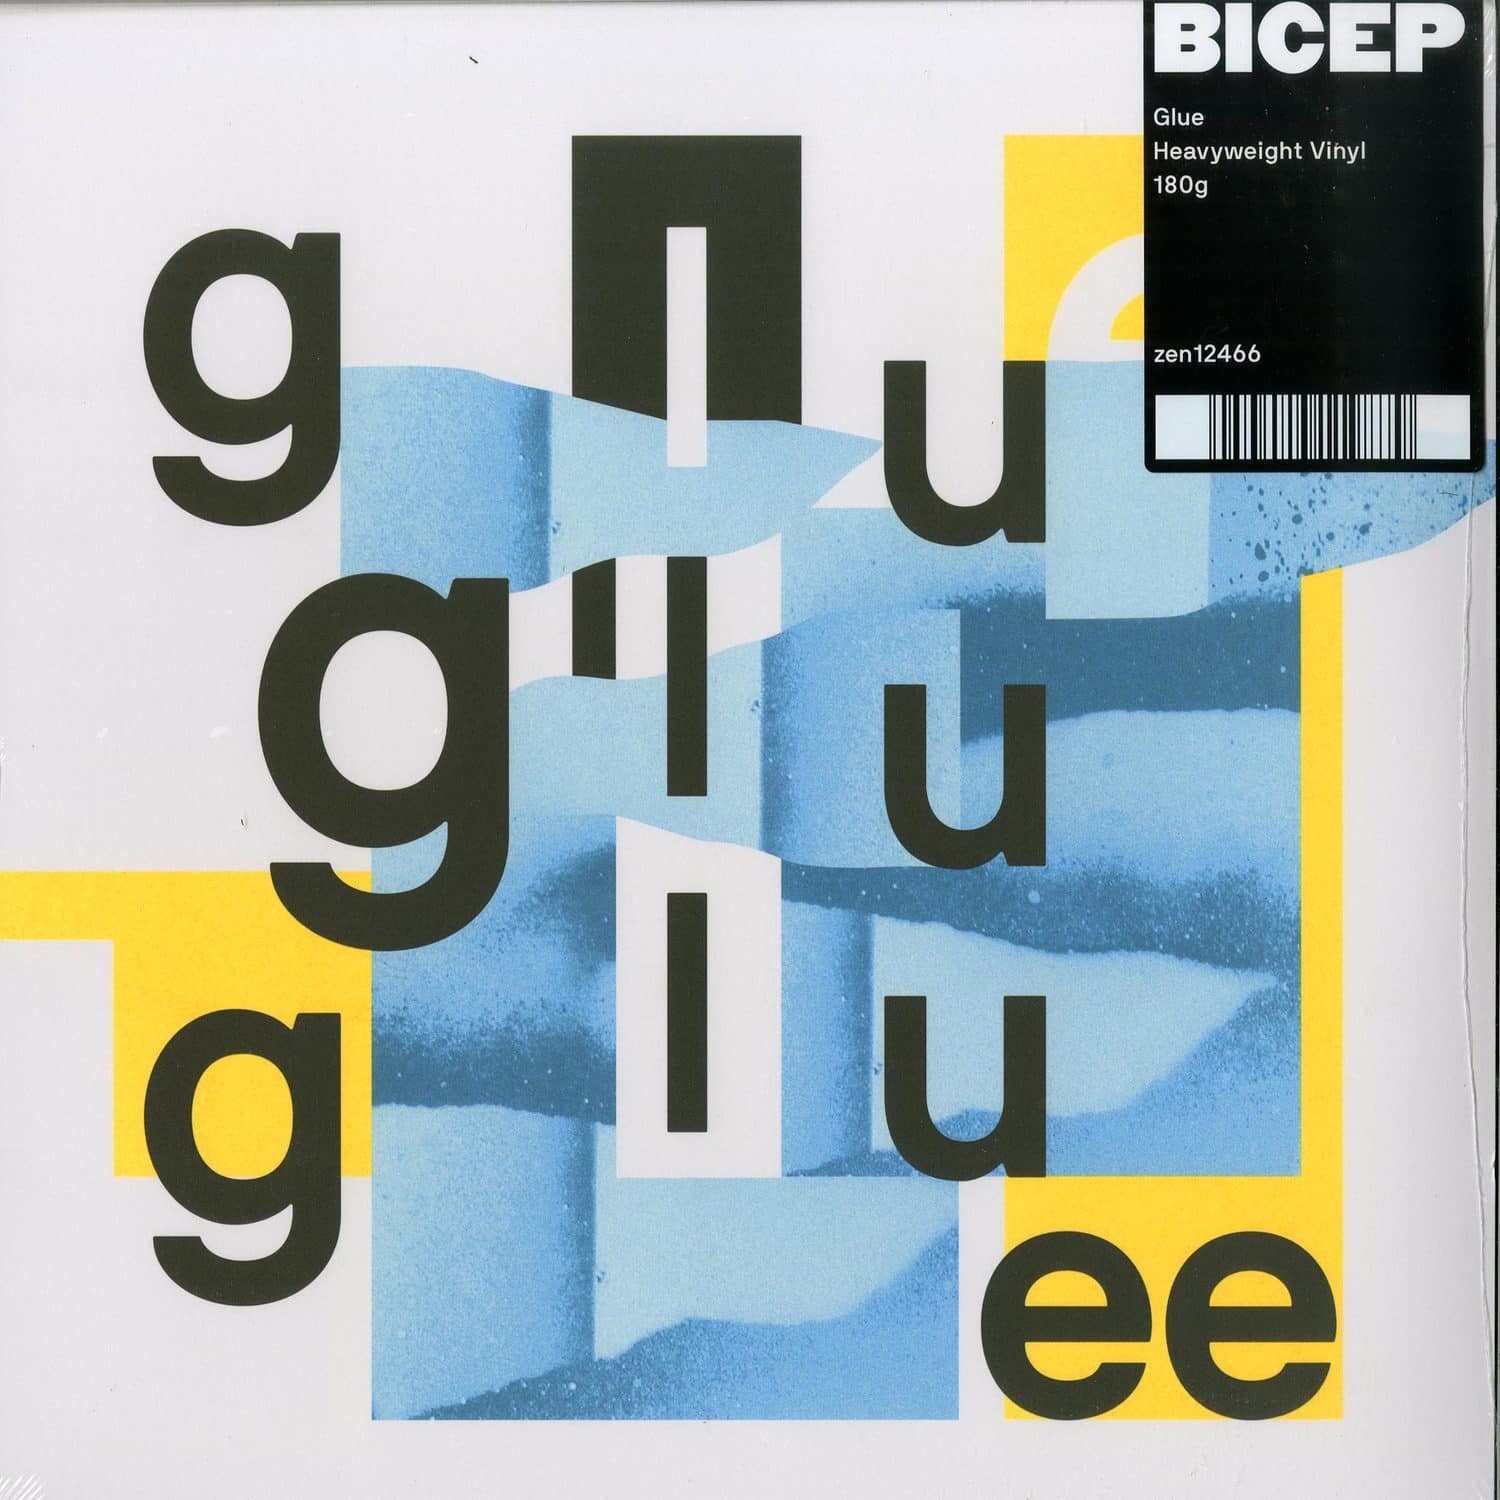 Bicep - GLUE